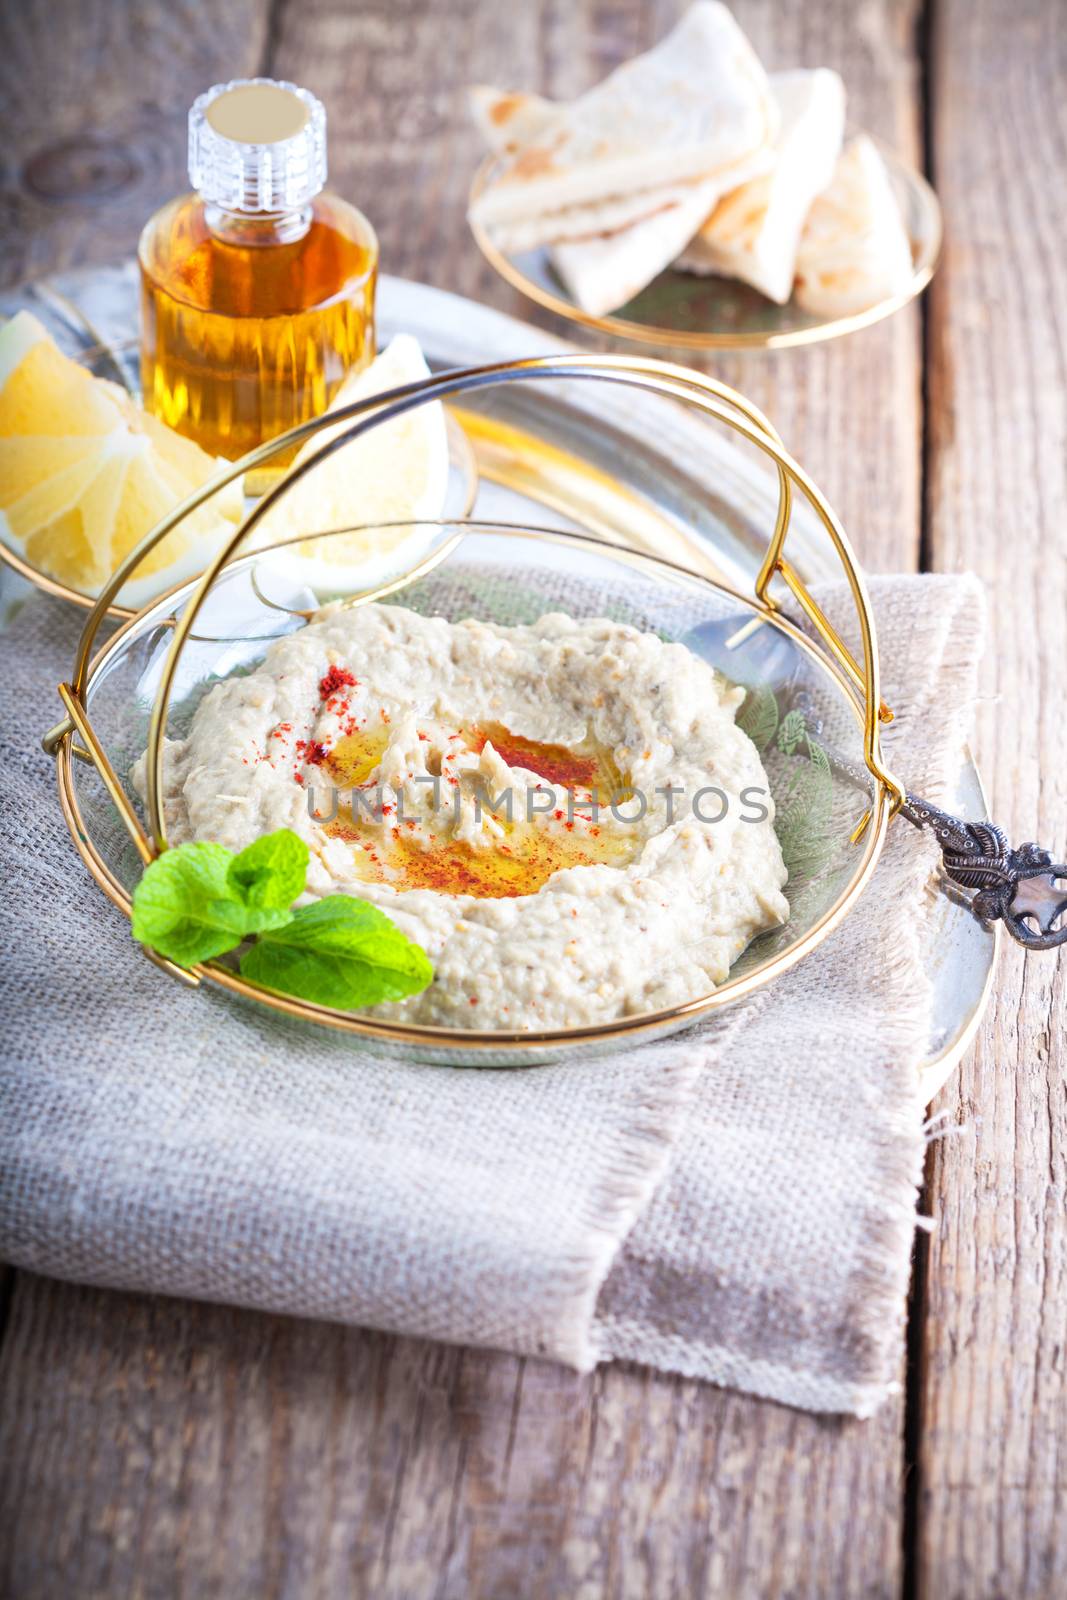 Baba ghanoush, eggplant dip, mediterranean food. by supercat67